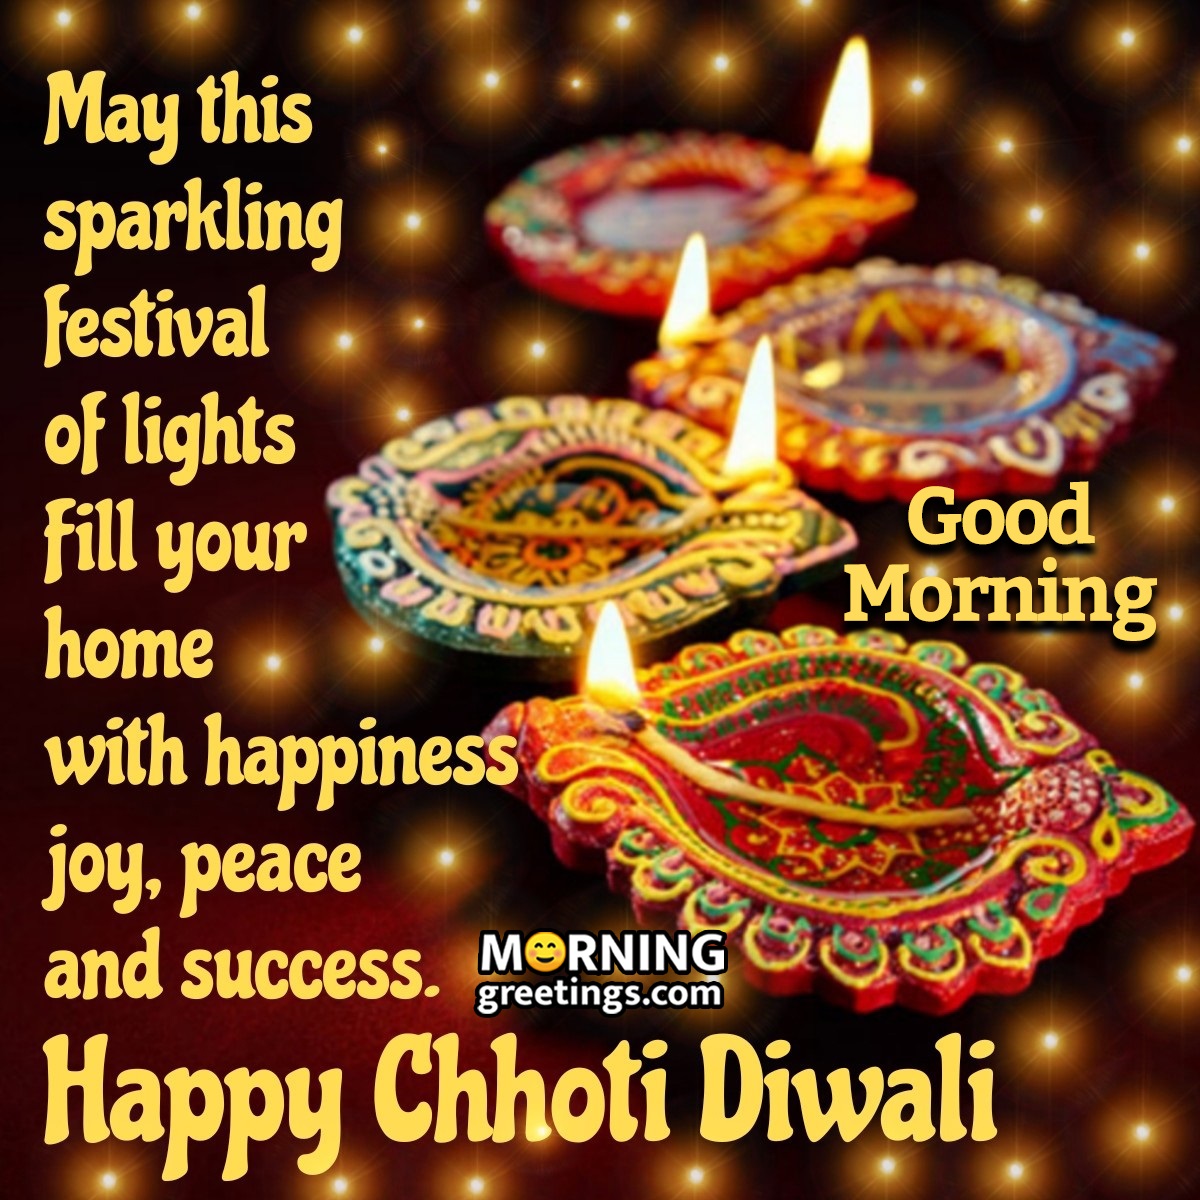 Happy Choti Diwali Good Morning Image